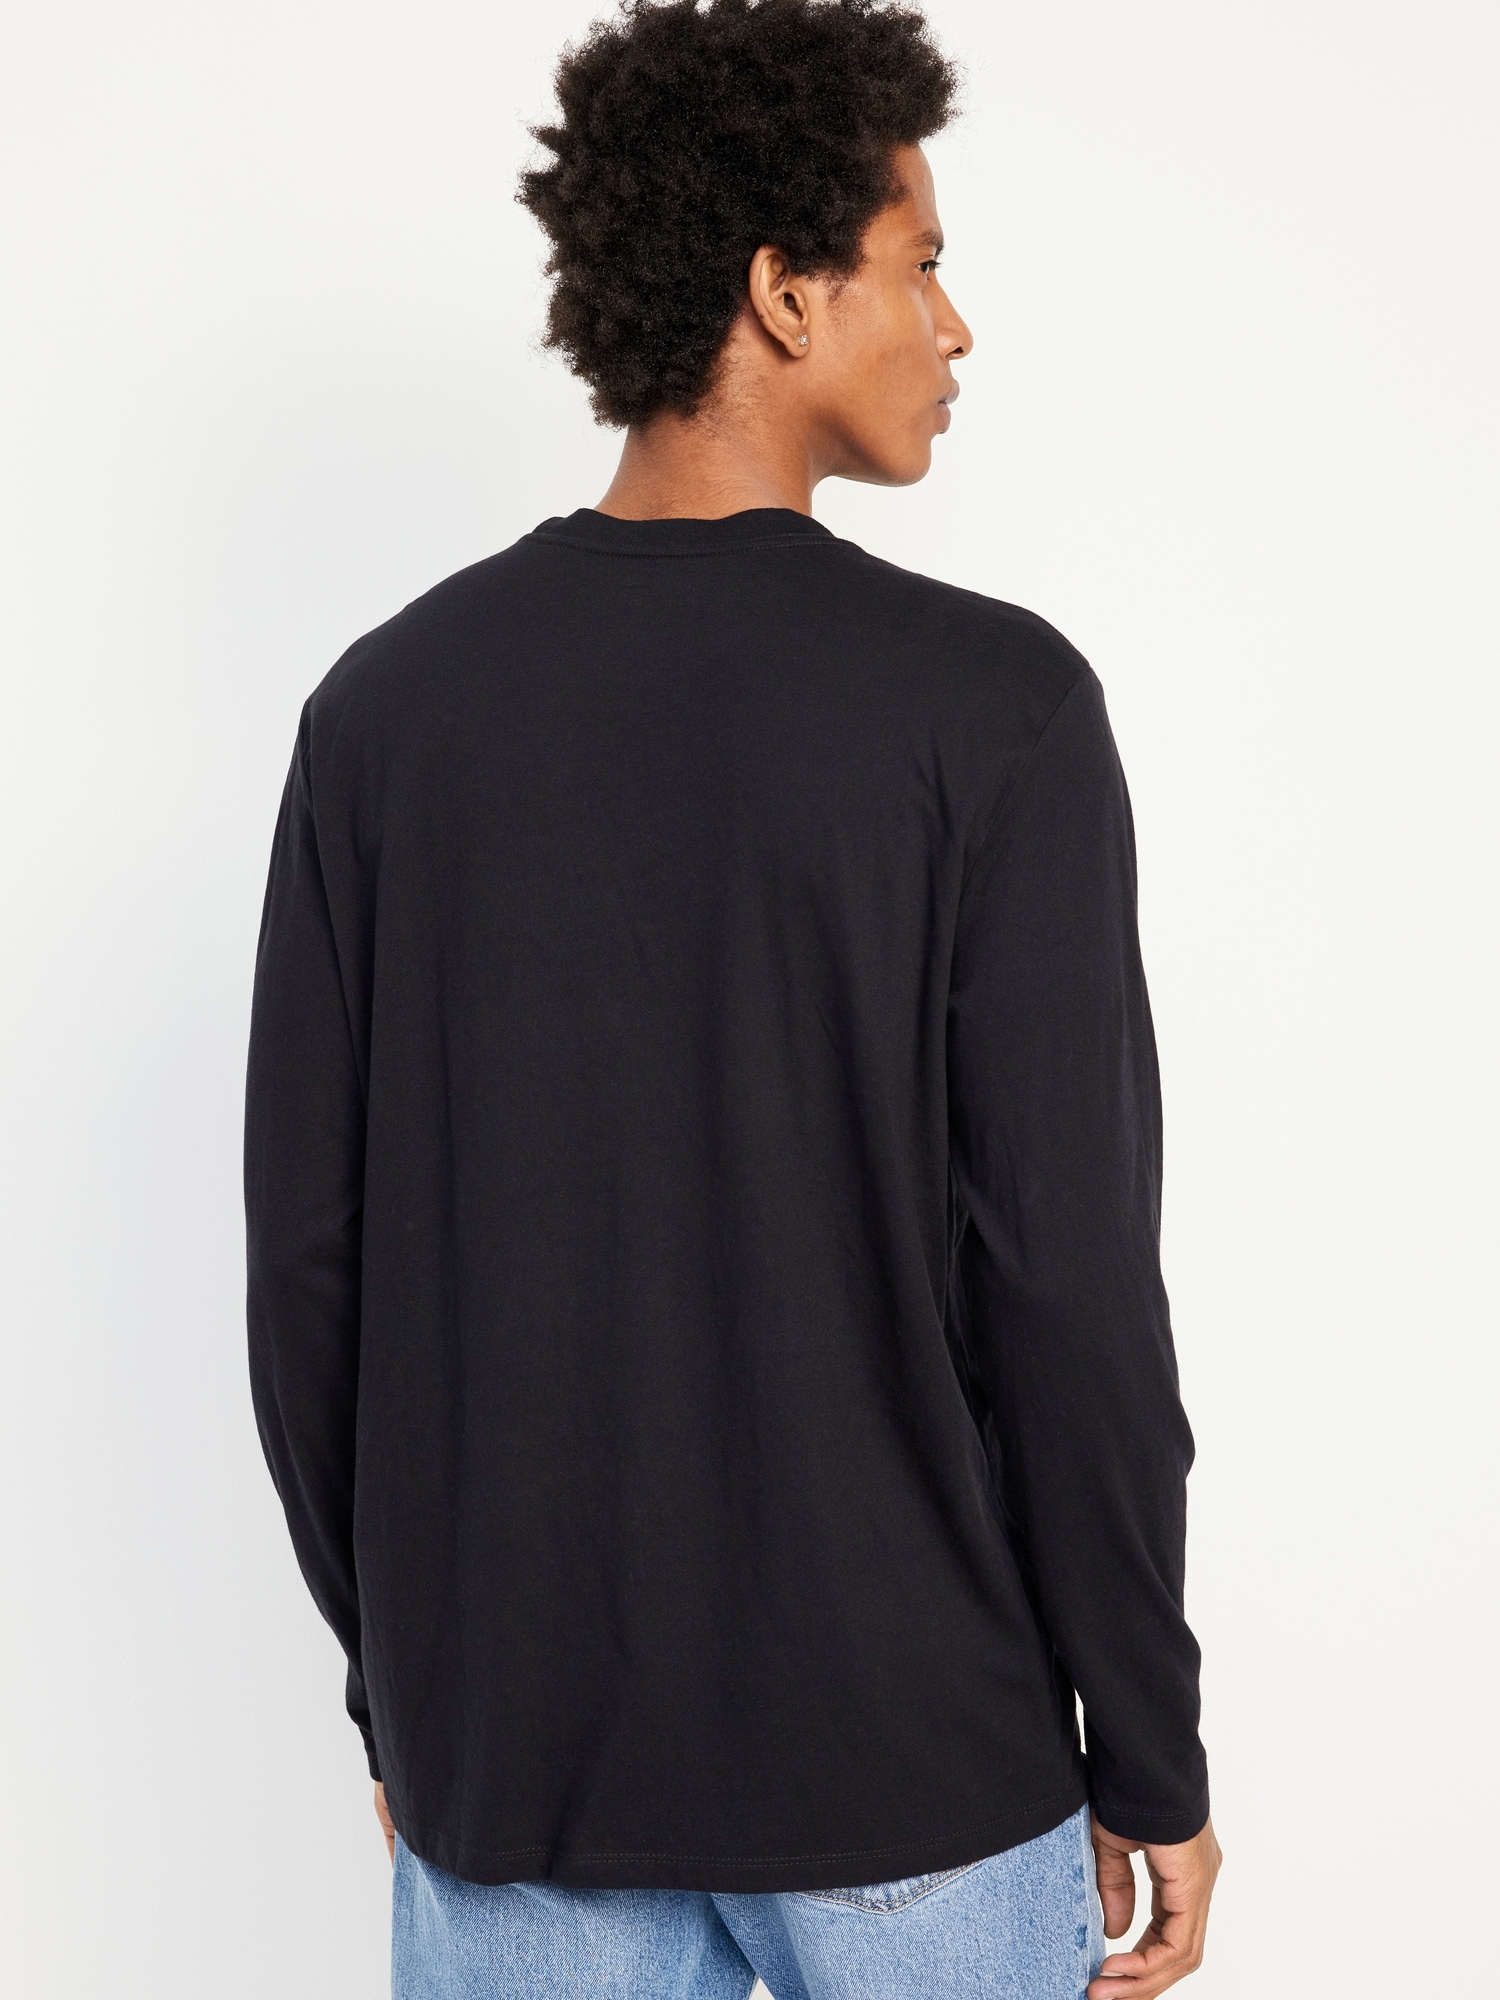 Blank T-Shirt 3-Pack | Charcoal, Navy, Brown | Threadheads